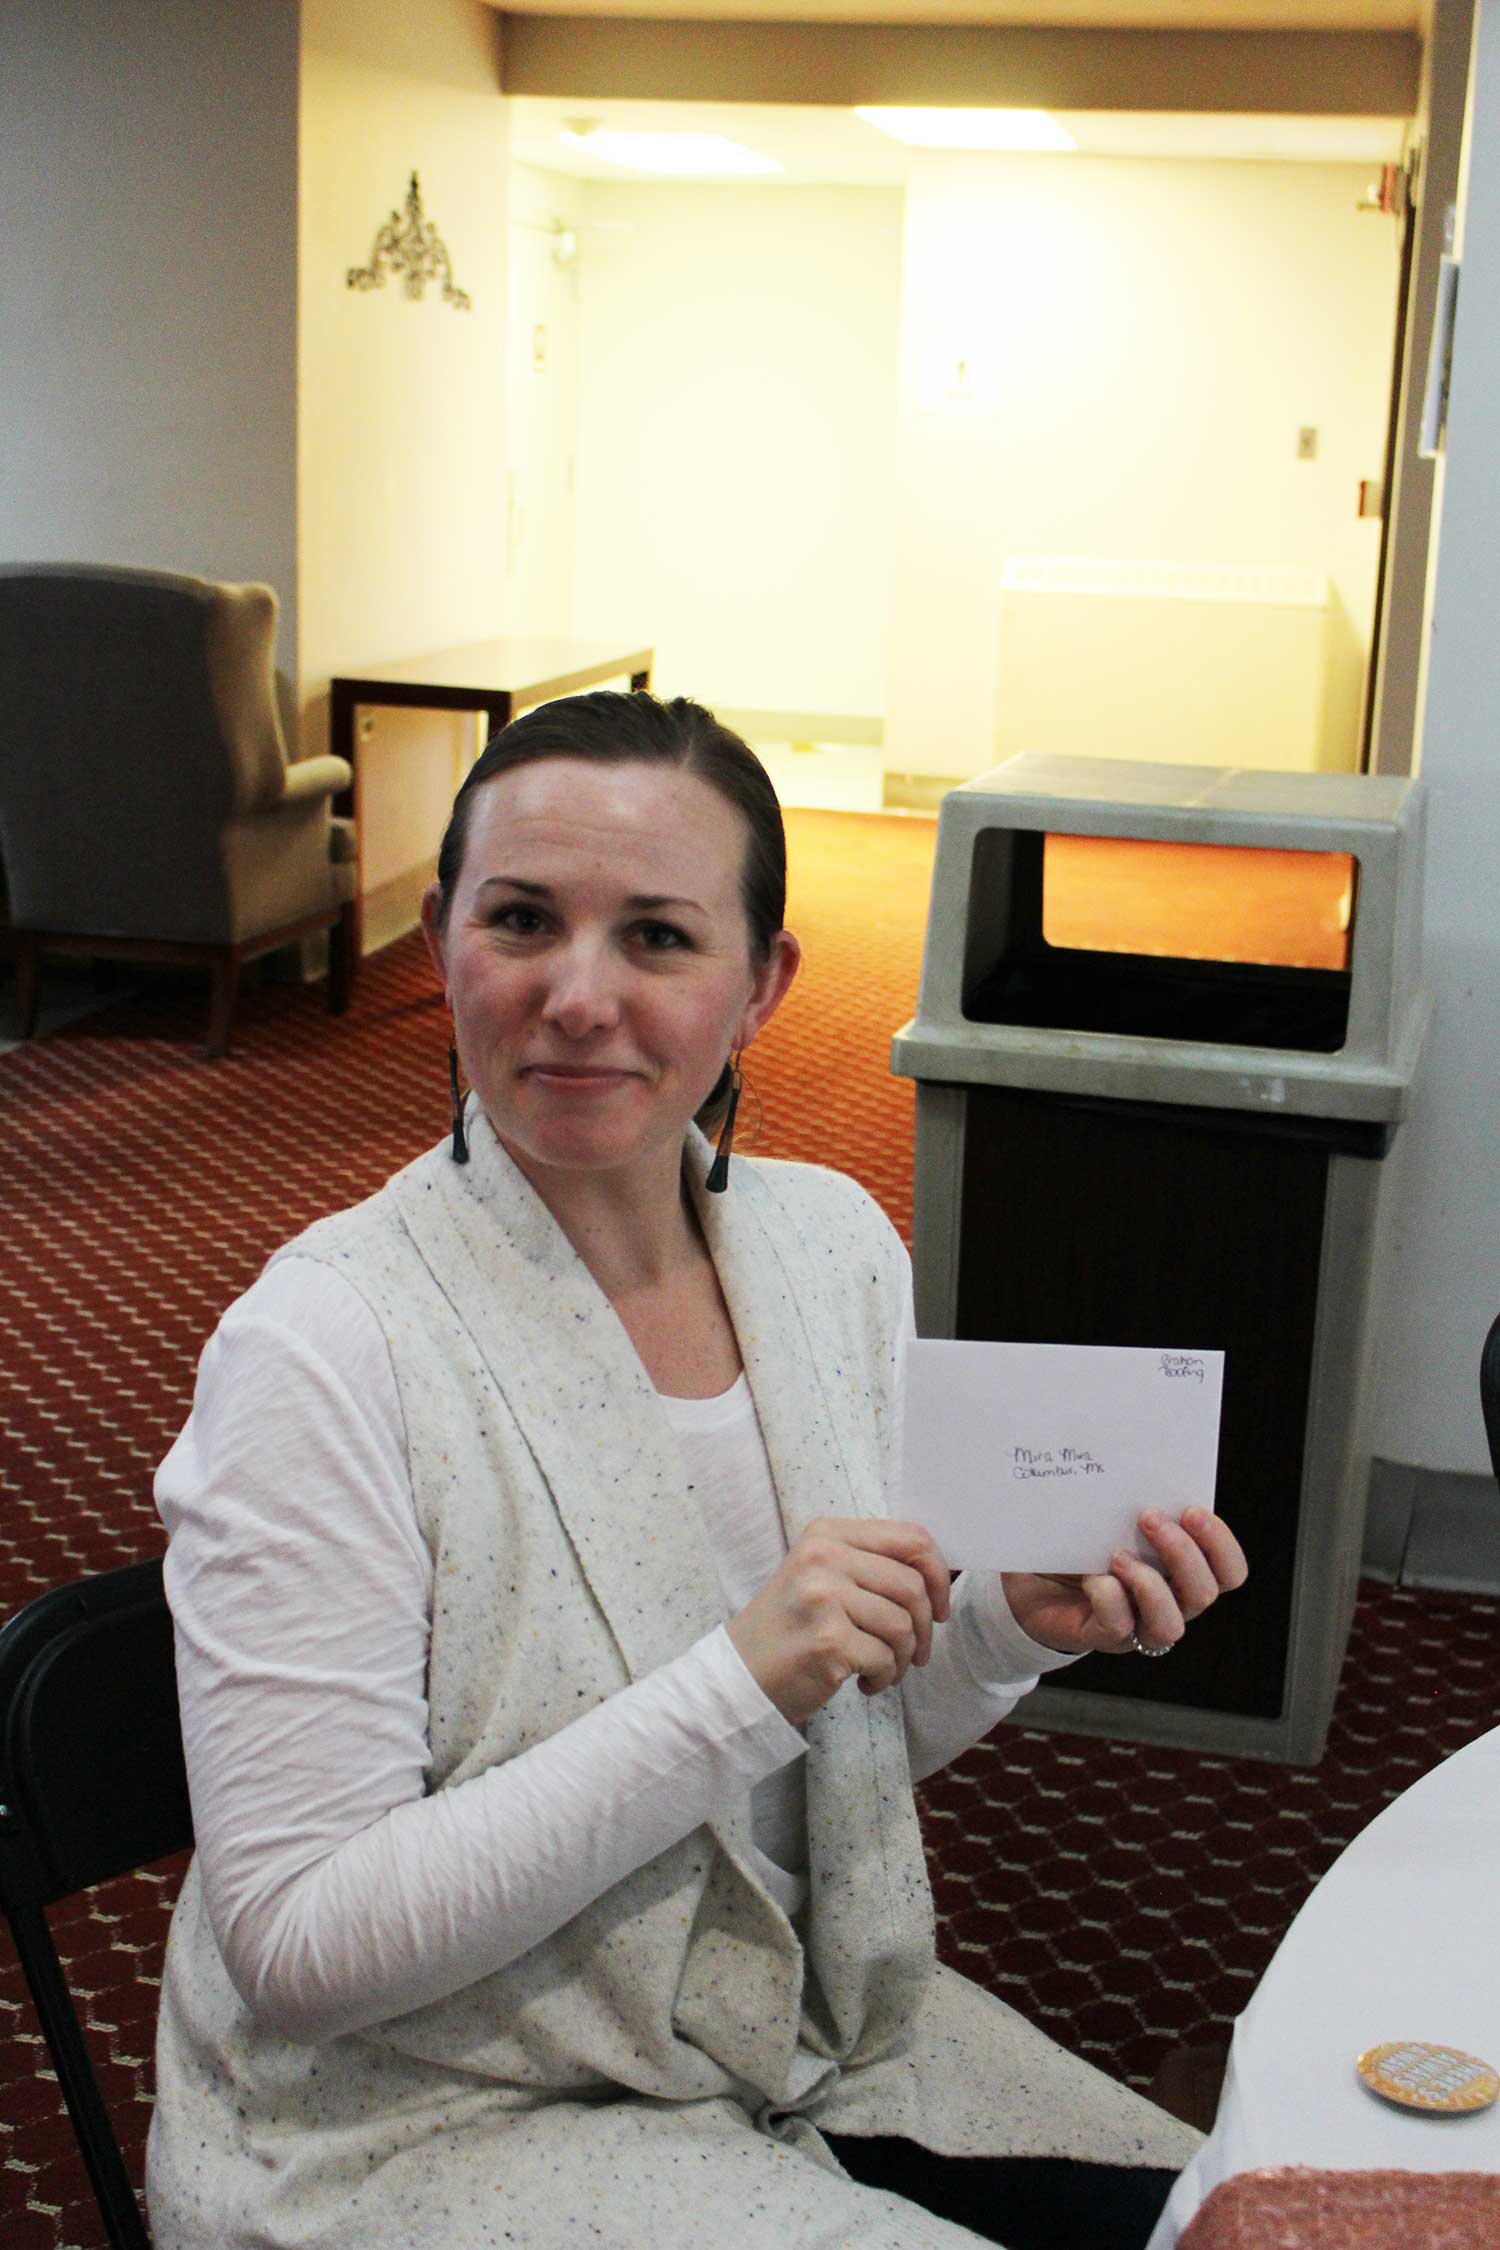 Michele Herrmann displays gift card envelope